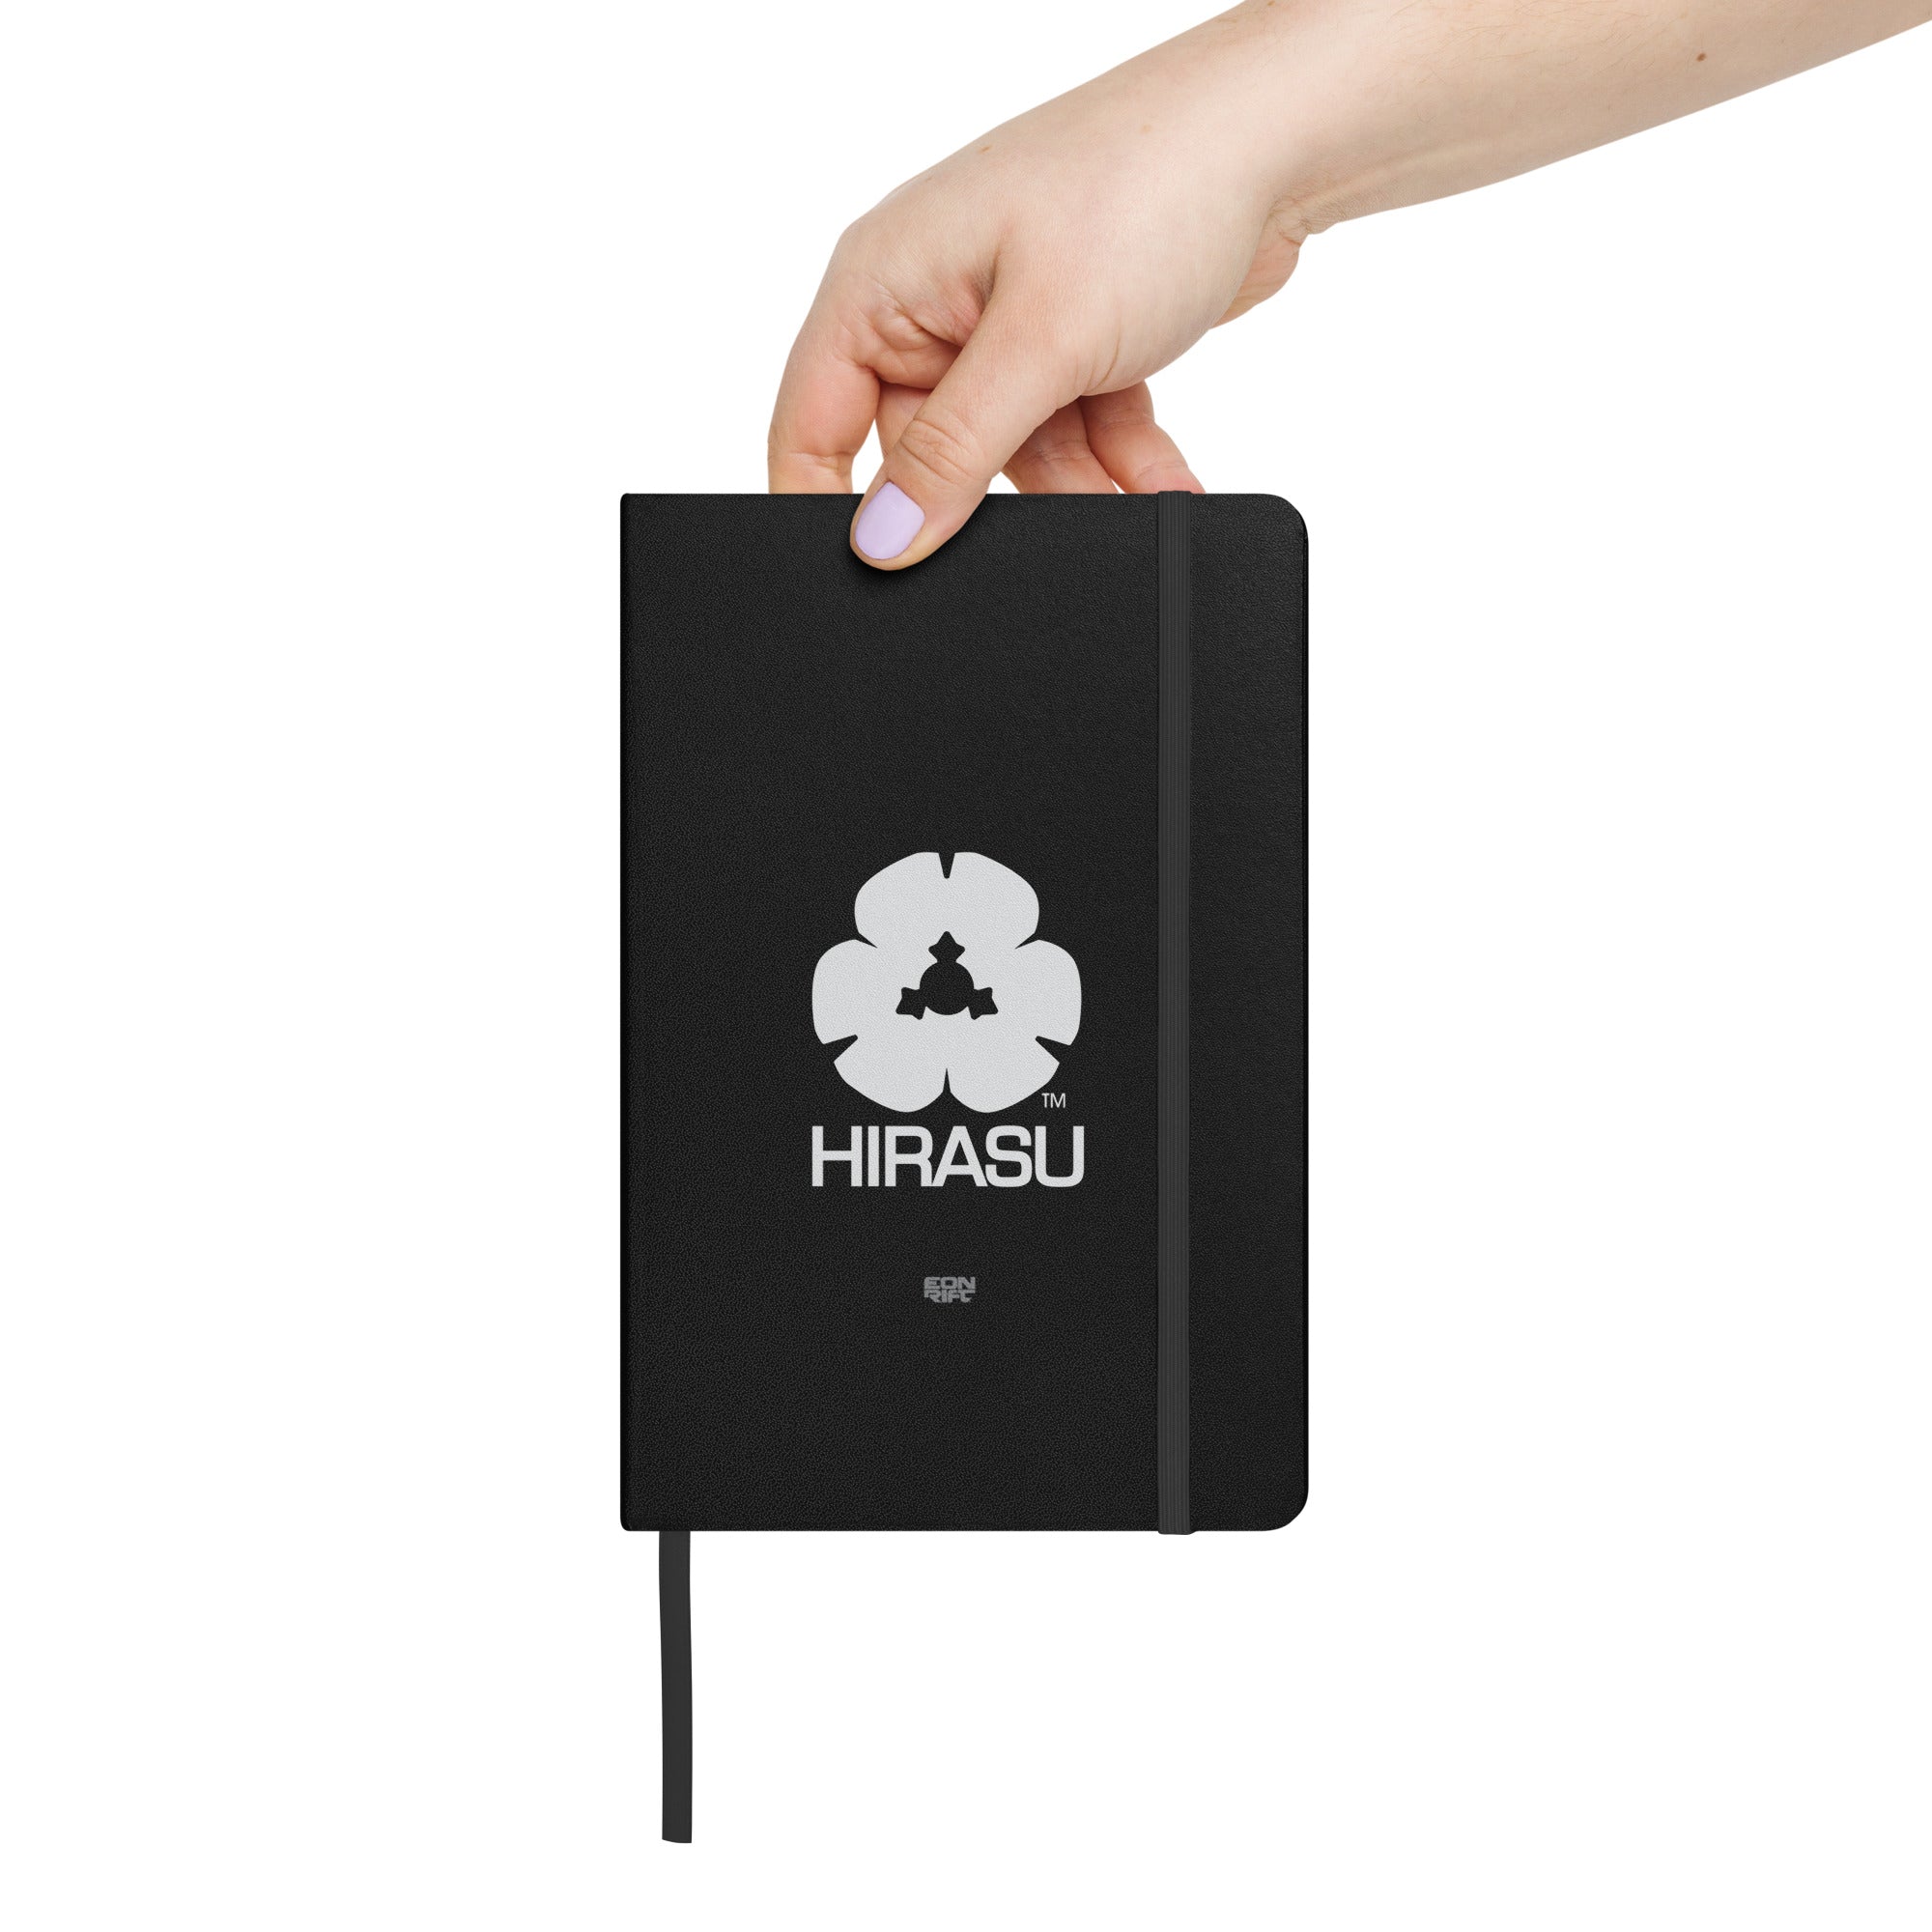 HIRASU | Hardcover bound notebook